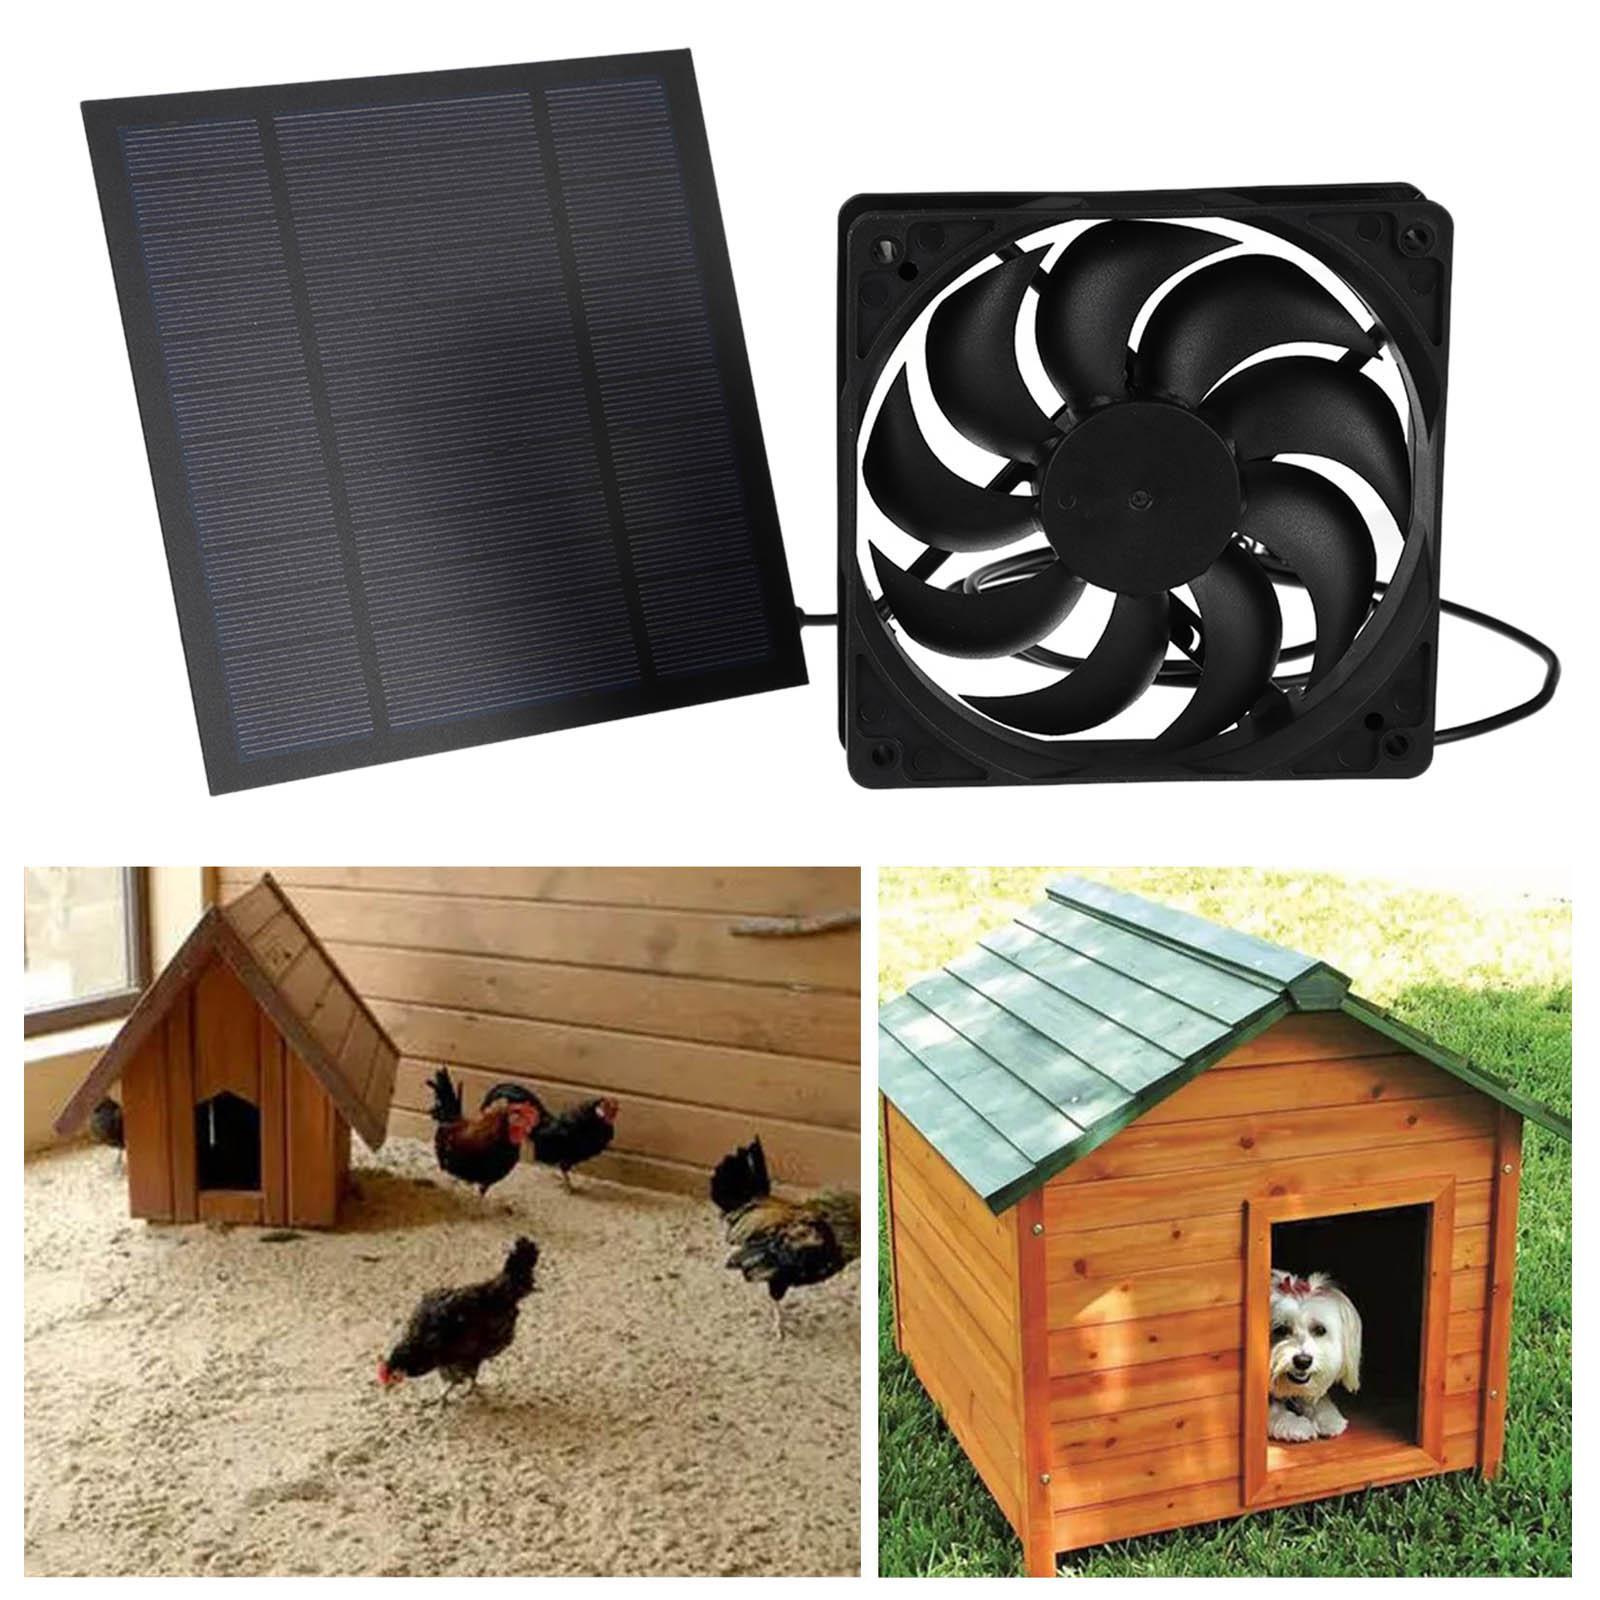 5W Solar Powered Panel Fan Exhaust Fan for Chicken Coop Poultry House RV